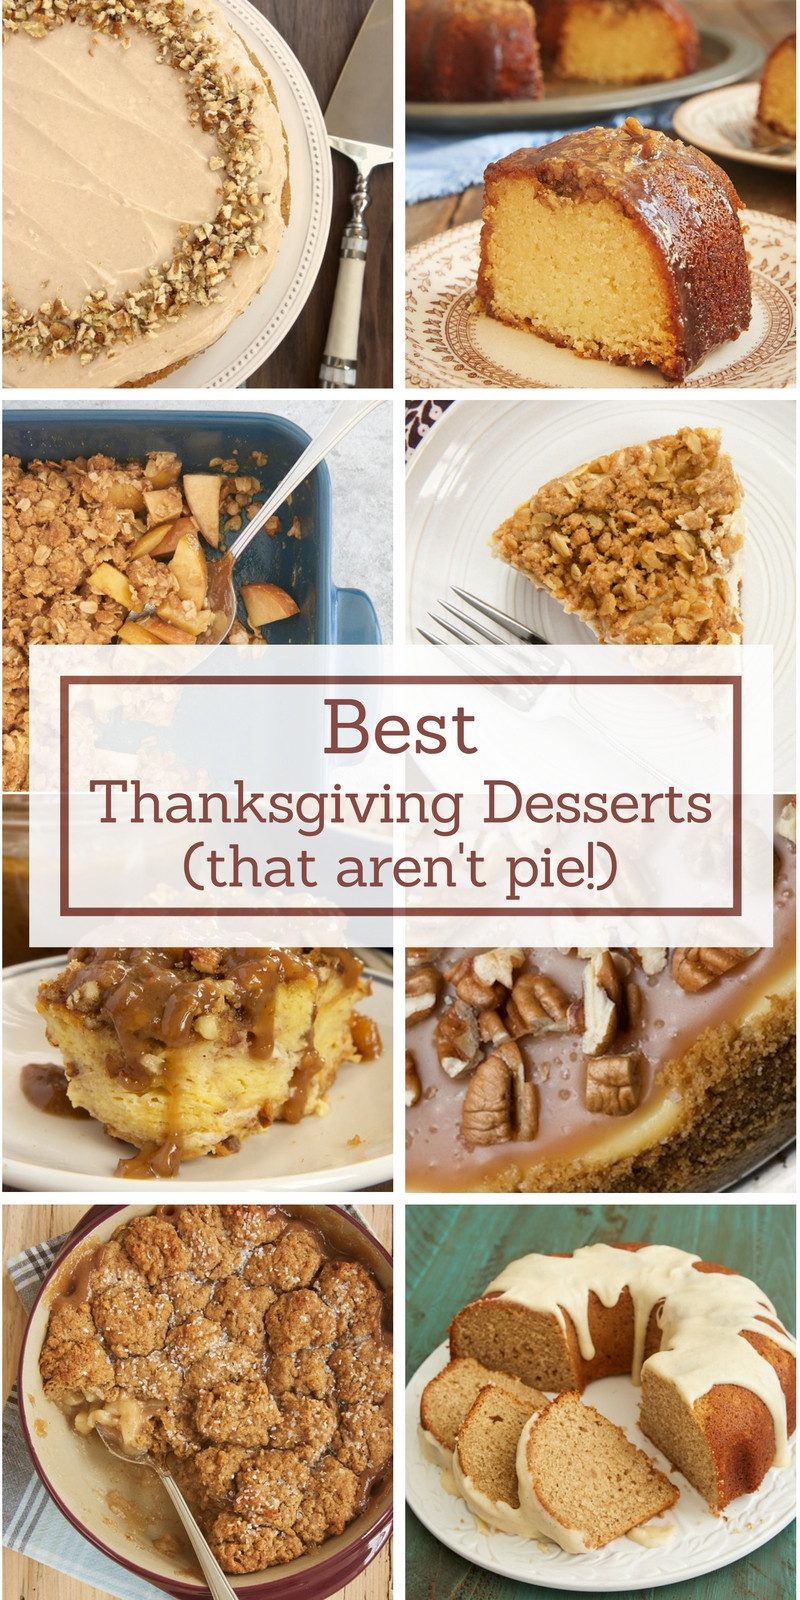 Top Thanksgiving Pies
 Best Thanksgiving Desserts Bake or Break